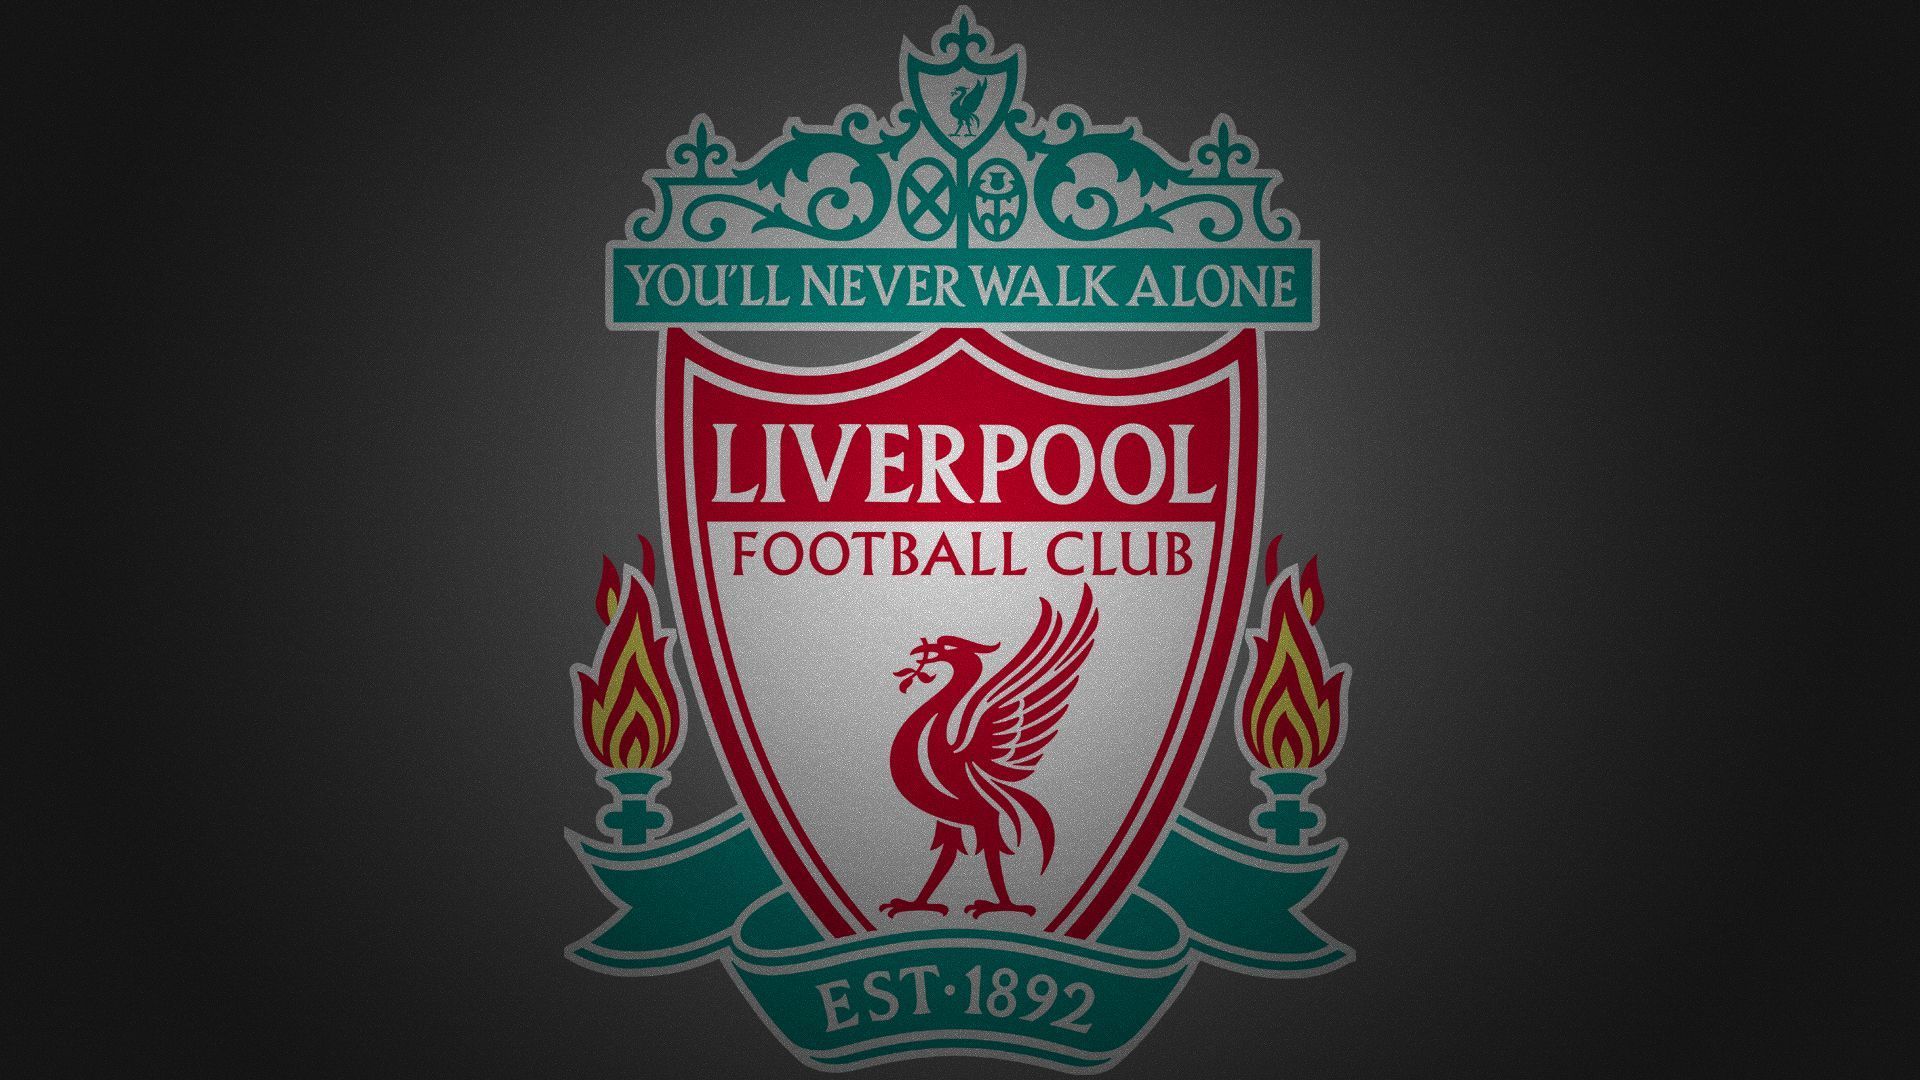 Liverpool F.C. Wallpaper Images Background #97256 - Ehiyo.com